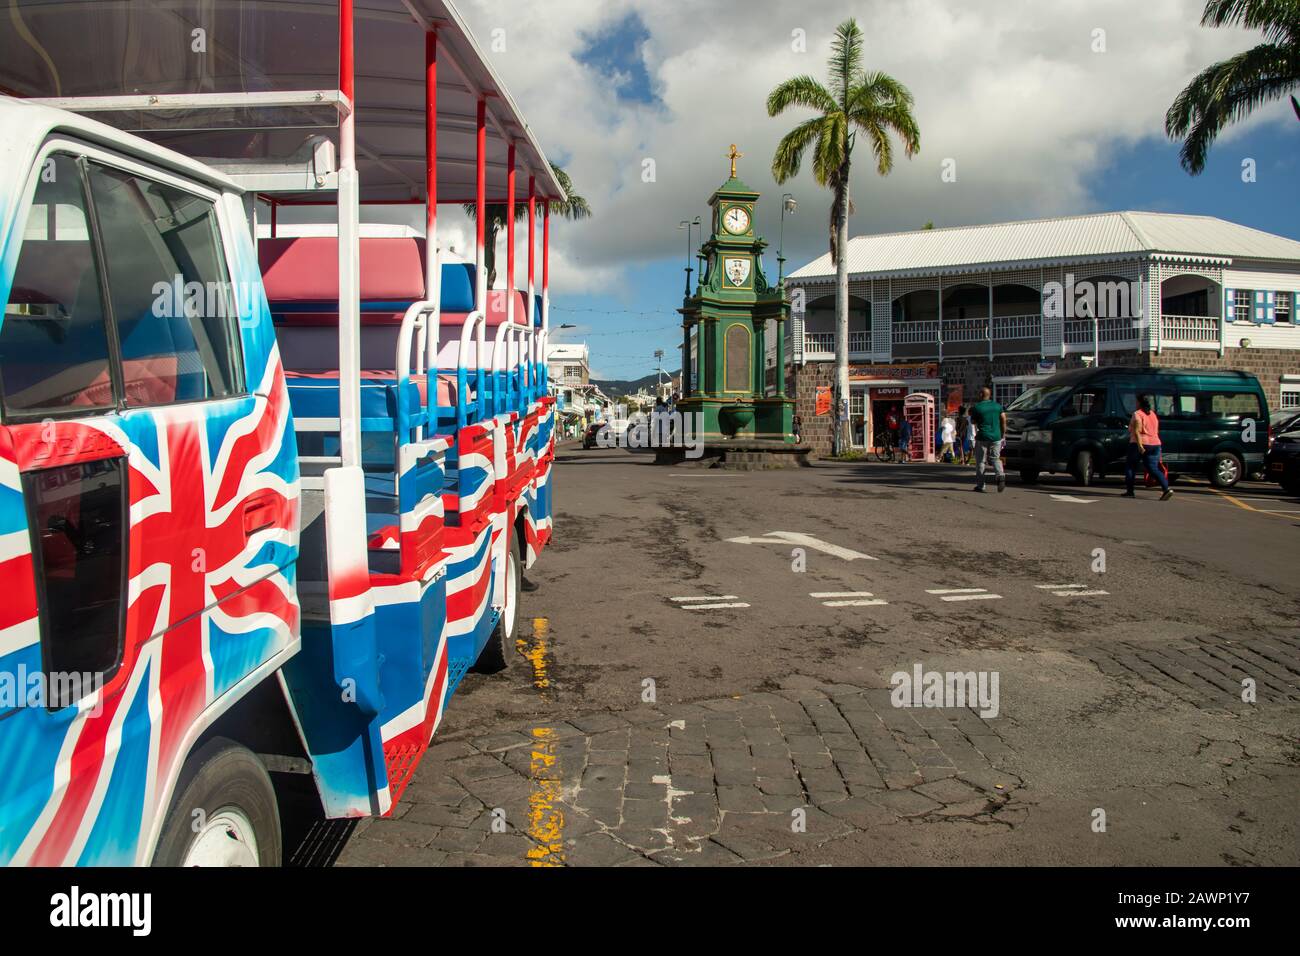 Basseterre, Saint Kitts - January 24, 2020:  Colorful tour bus near clock tower in Basseterre, Saint Kitts. Stock Photo